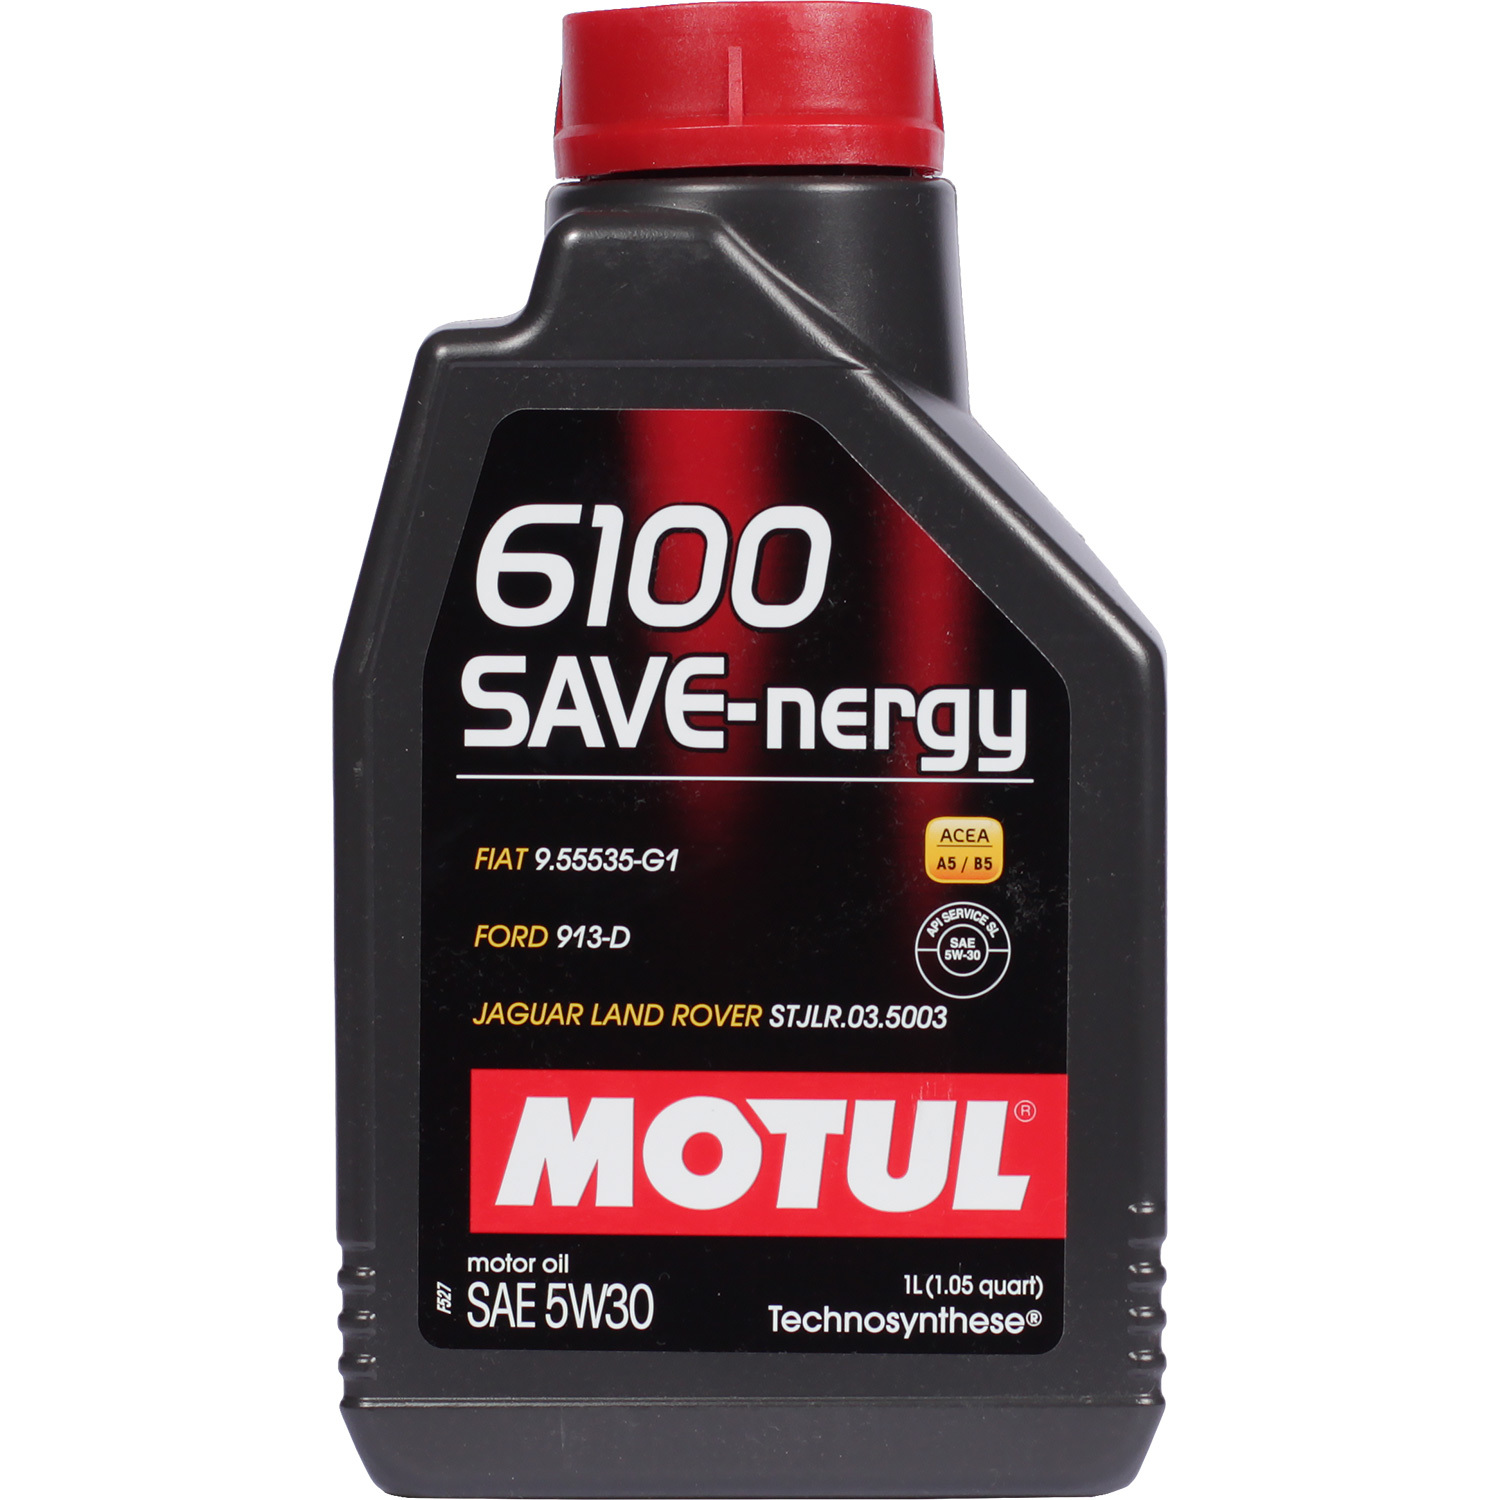 Motul Моторное масло Motul 6100 SAVE-NERGY 5W-30, 1 л motul моторное масло motul 6100 save lite 5w 30 1 л